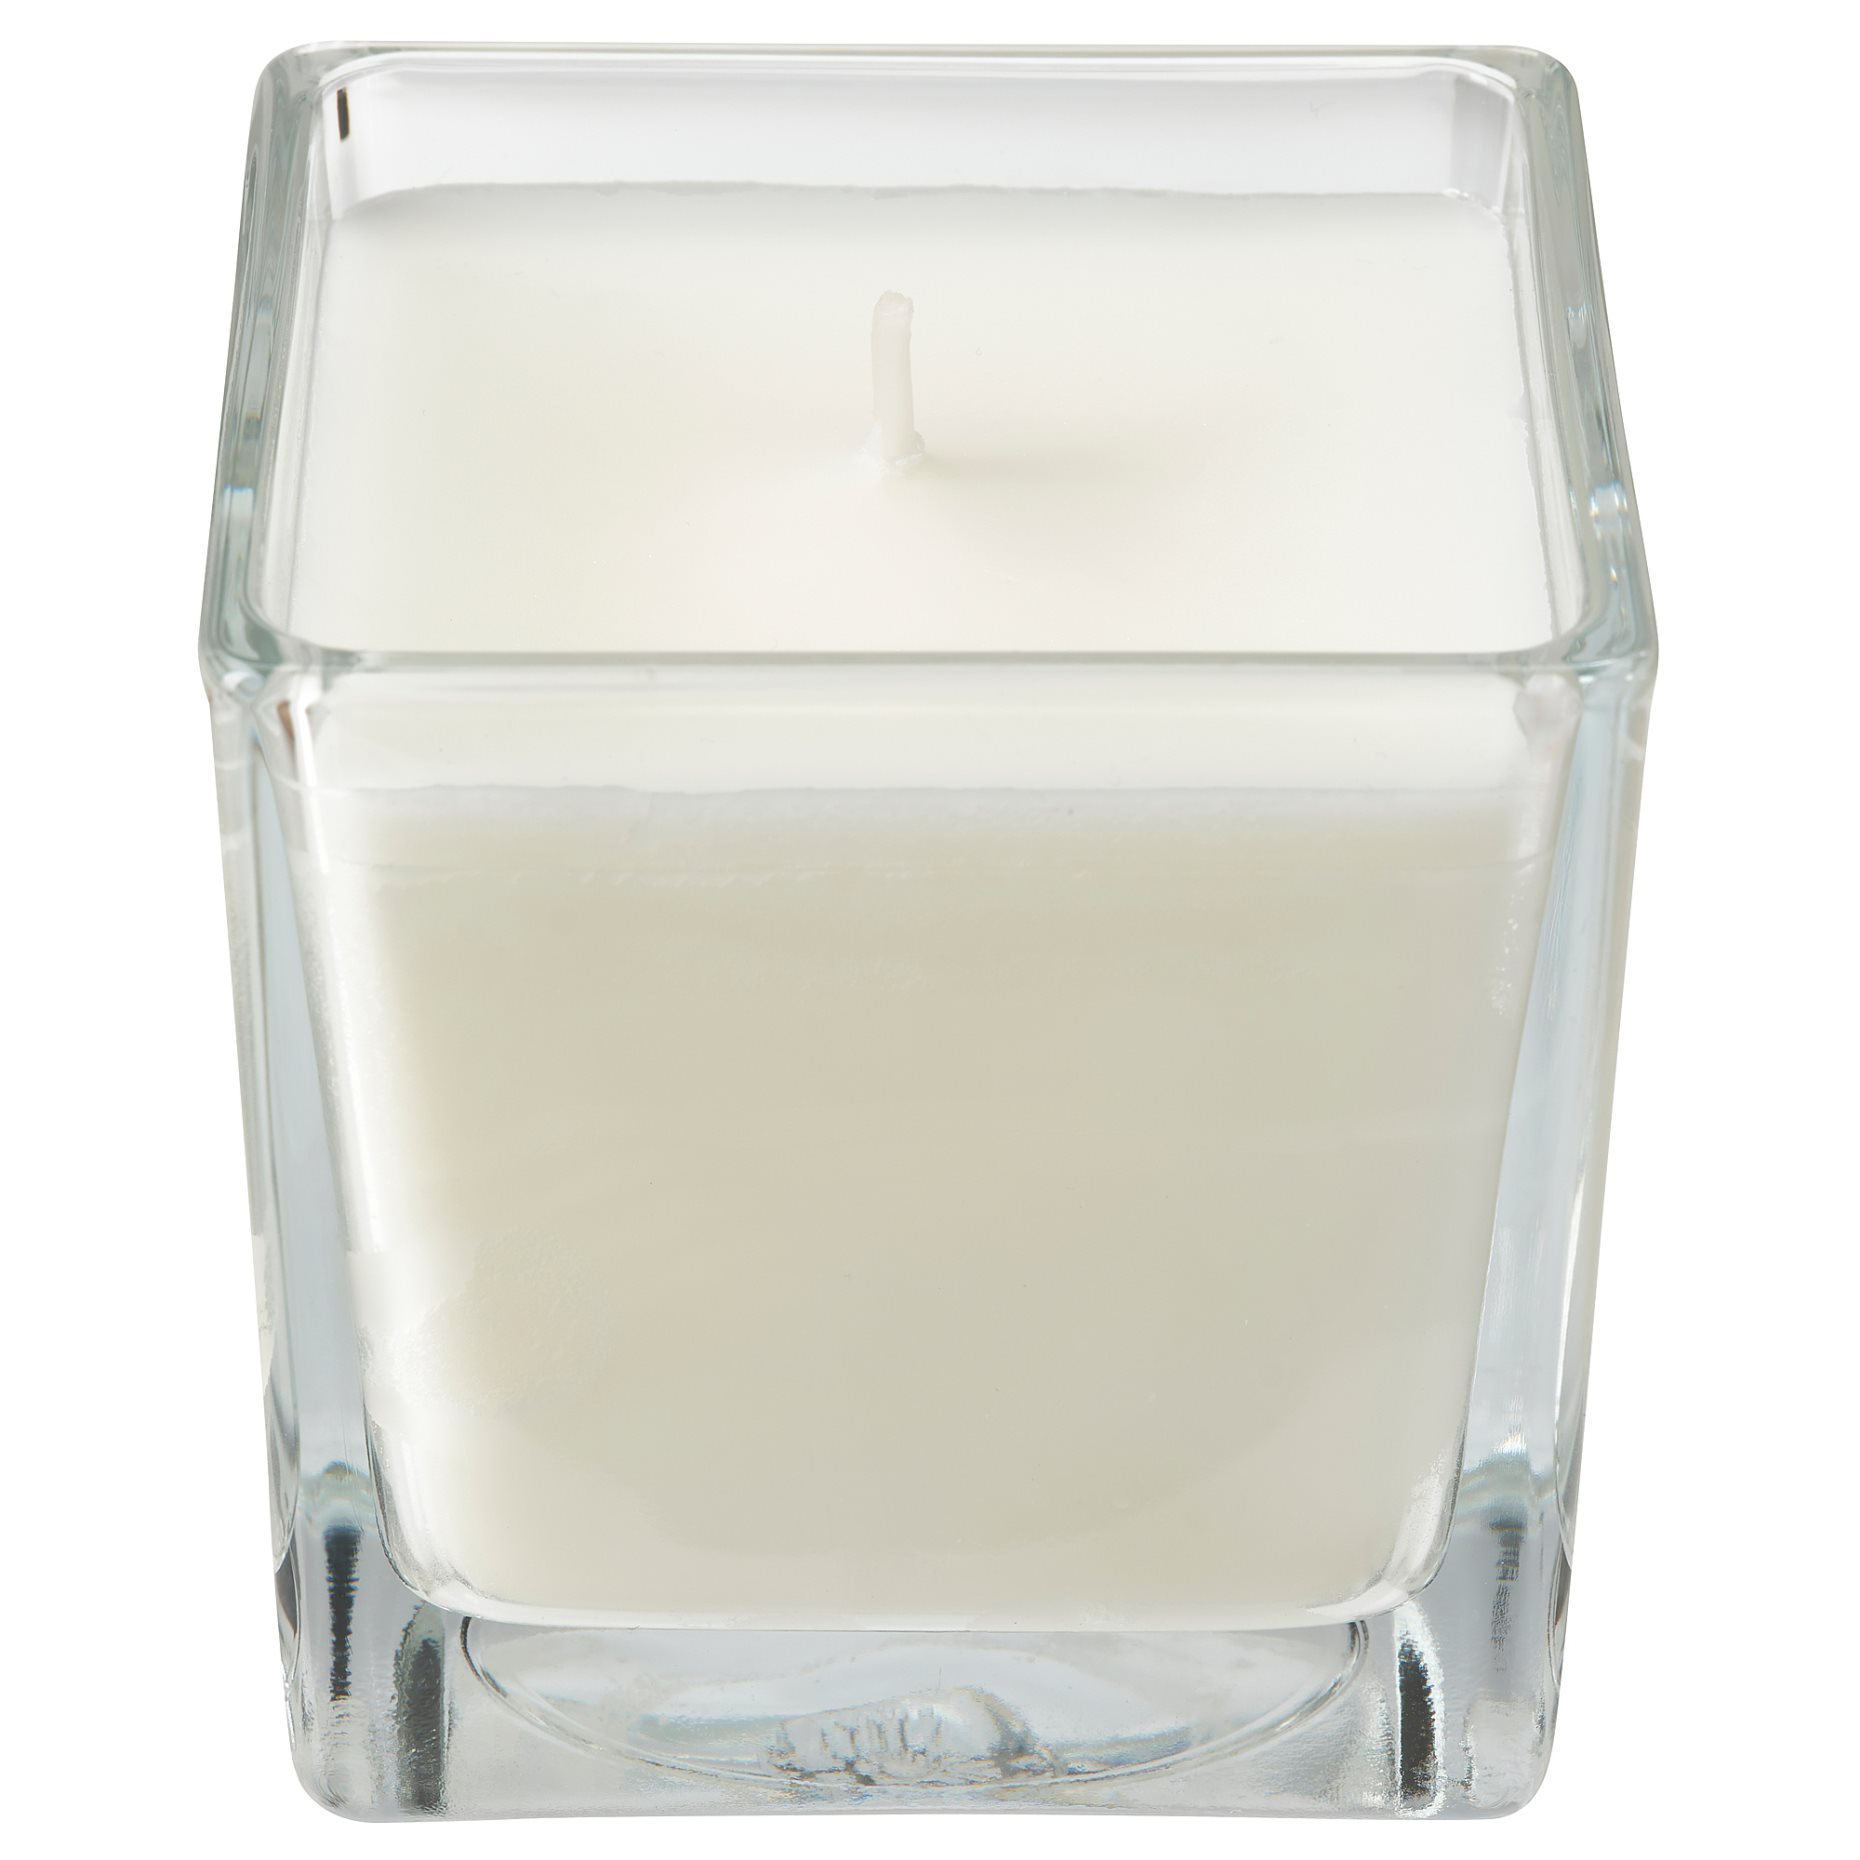 FRAMFÄRD, αρωματικό κερί σε ποτήρι/άρωμα φρεσκοπλυμένου, 8 cm, 704.967.85